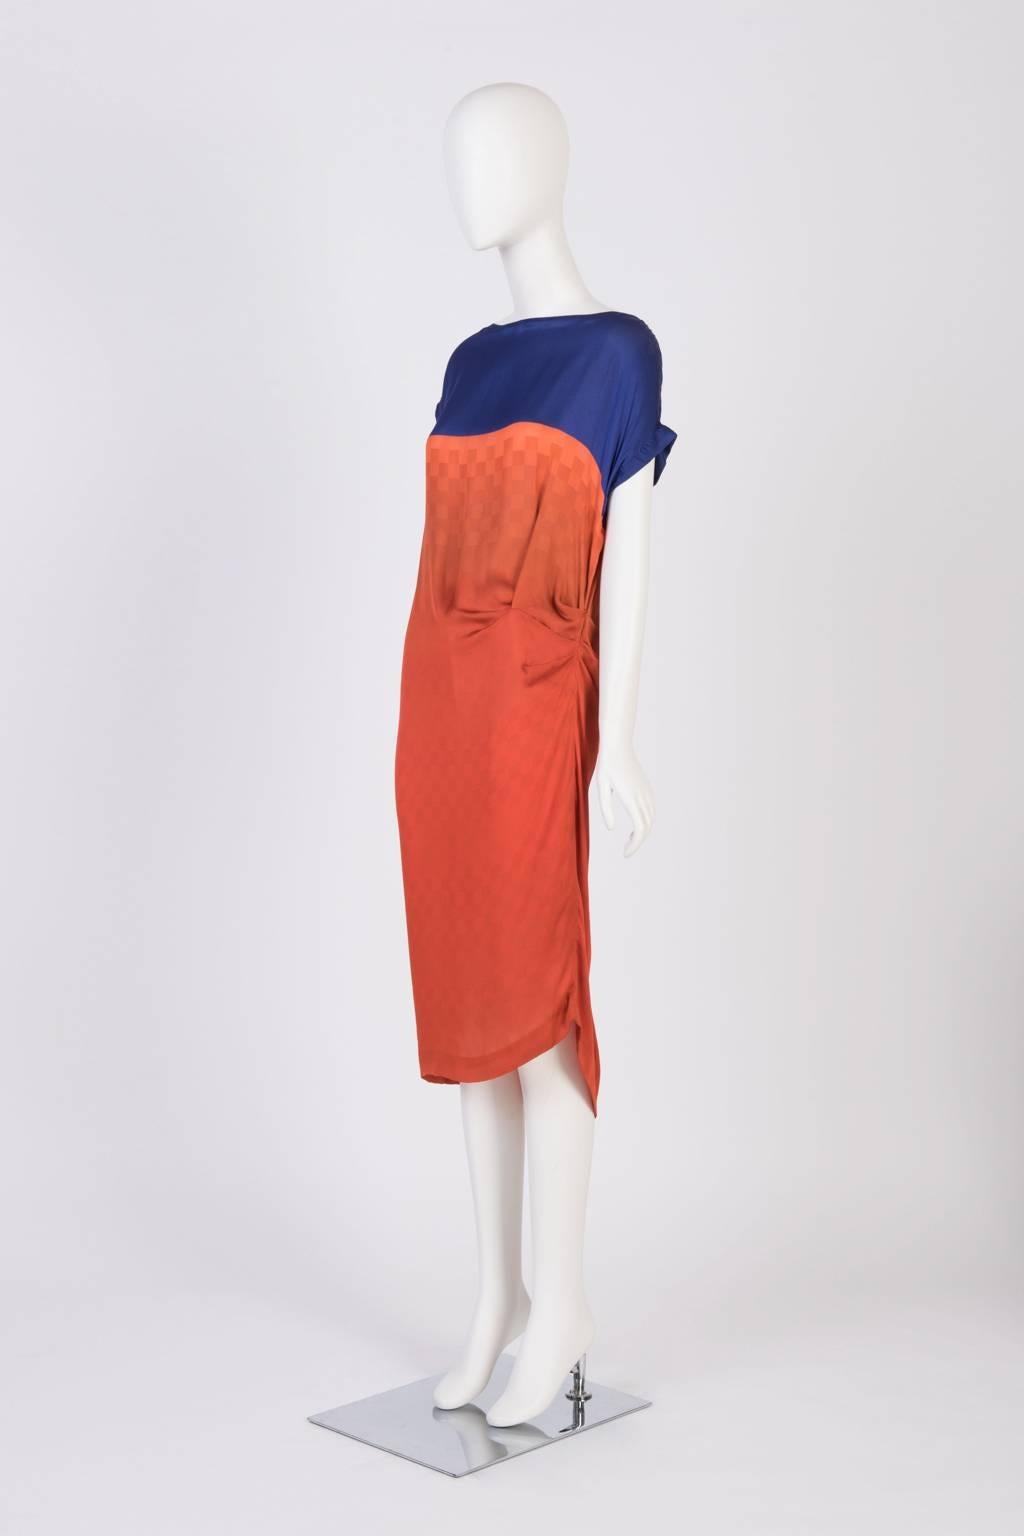 Dries Van Noten loose fit bias cut silk dress in color blocking print with cap sleeves. Subtle check details on print.   